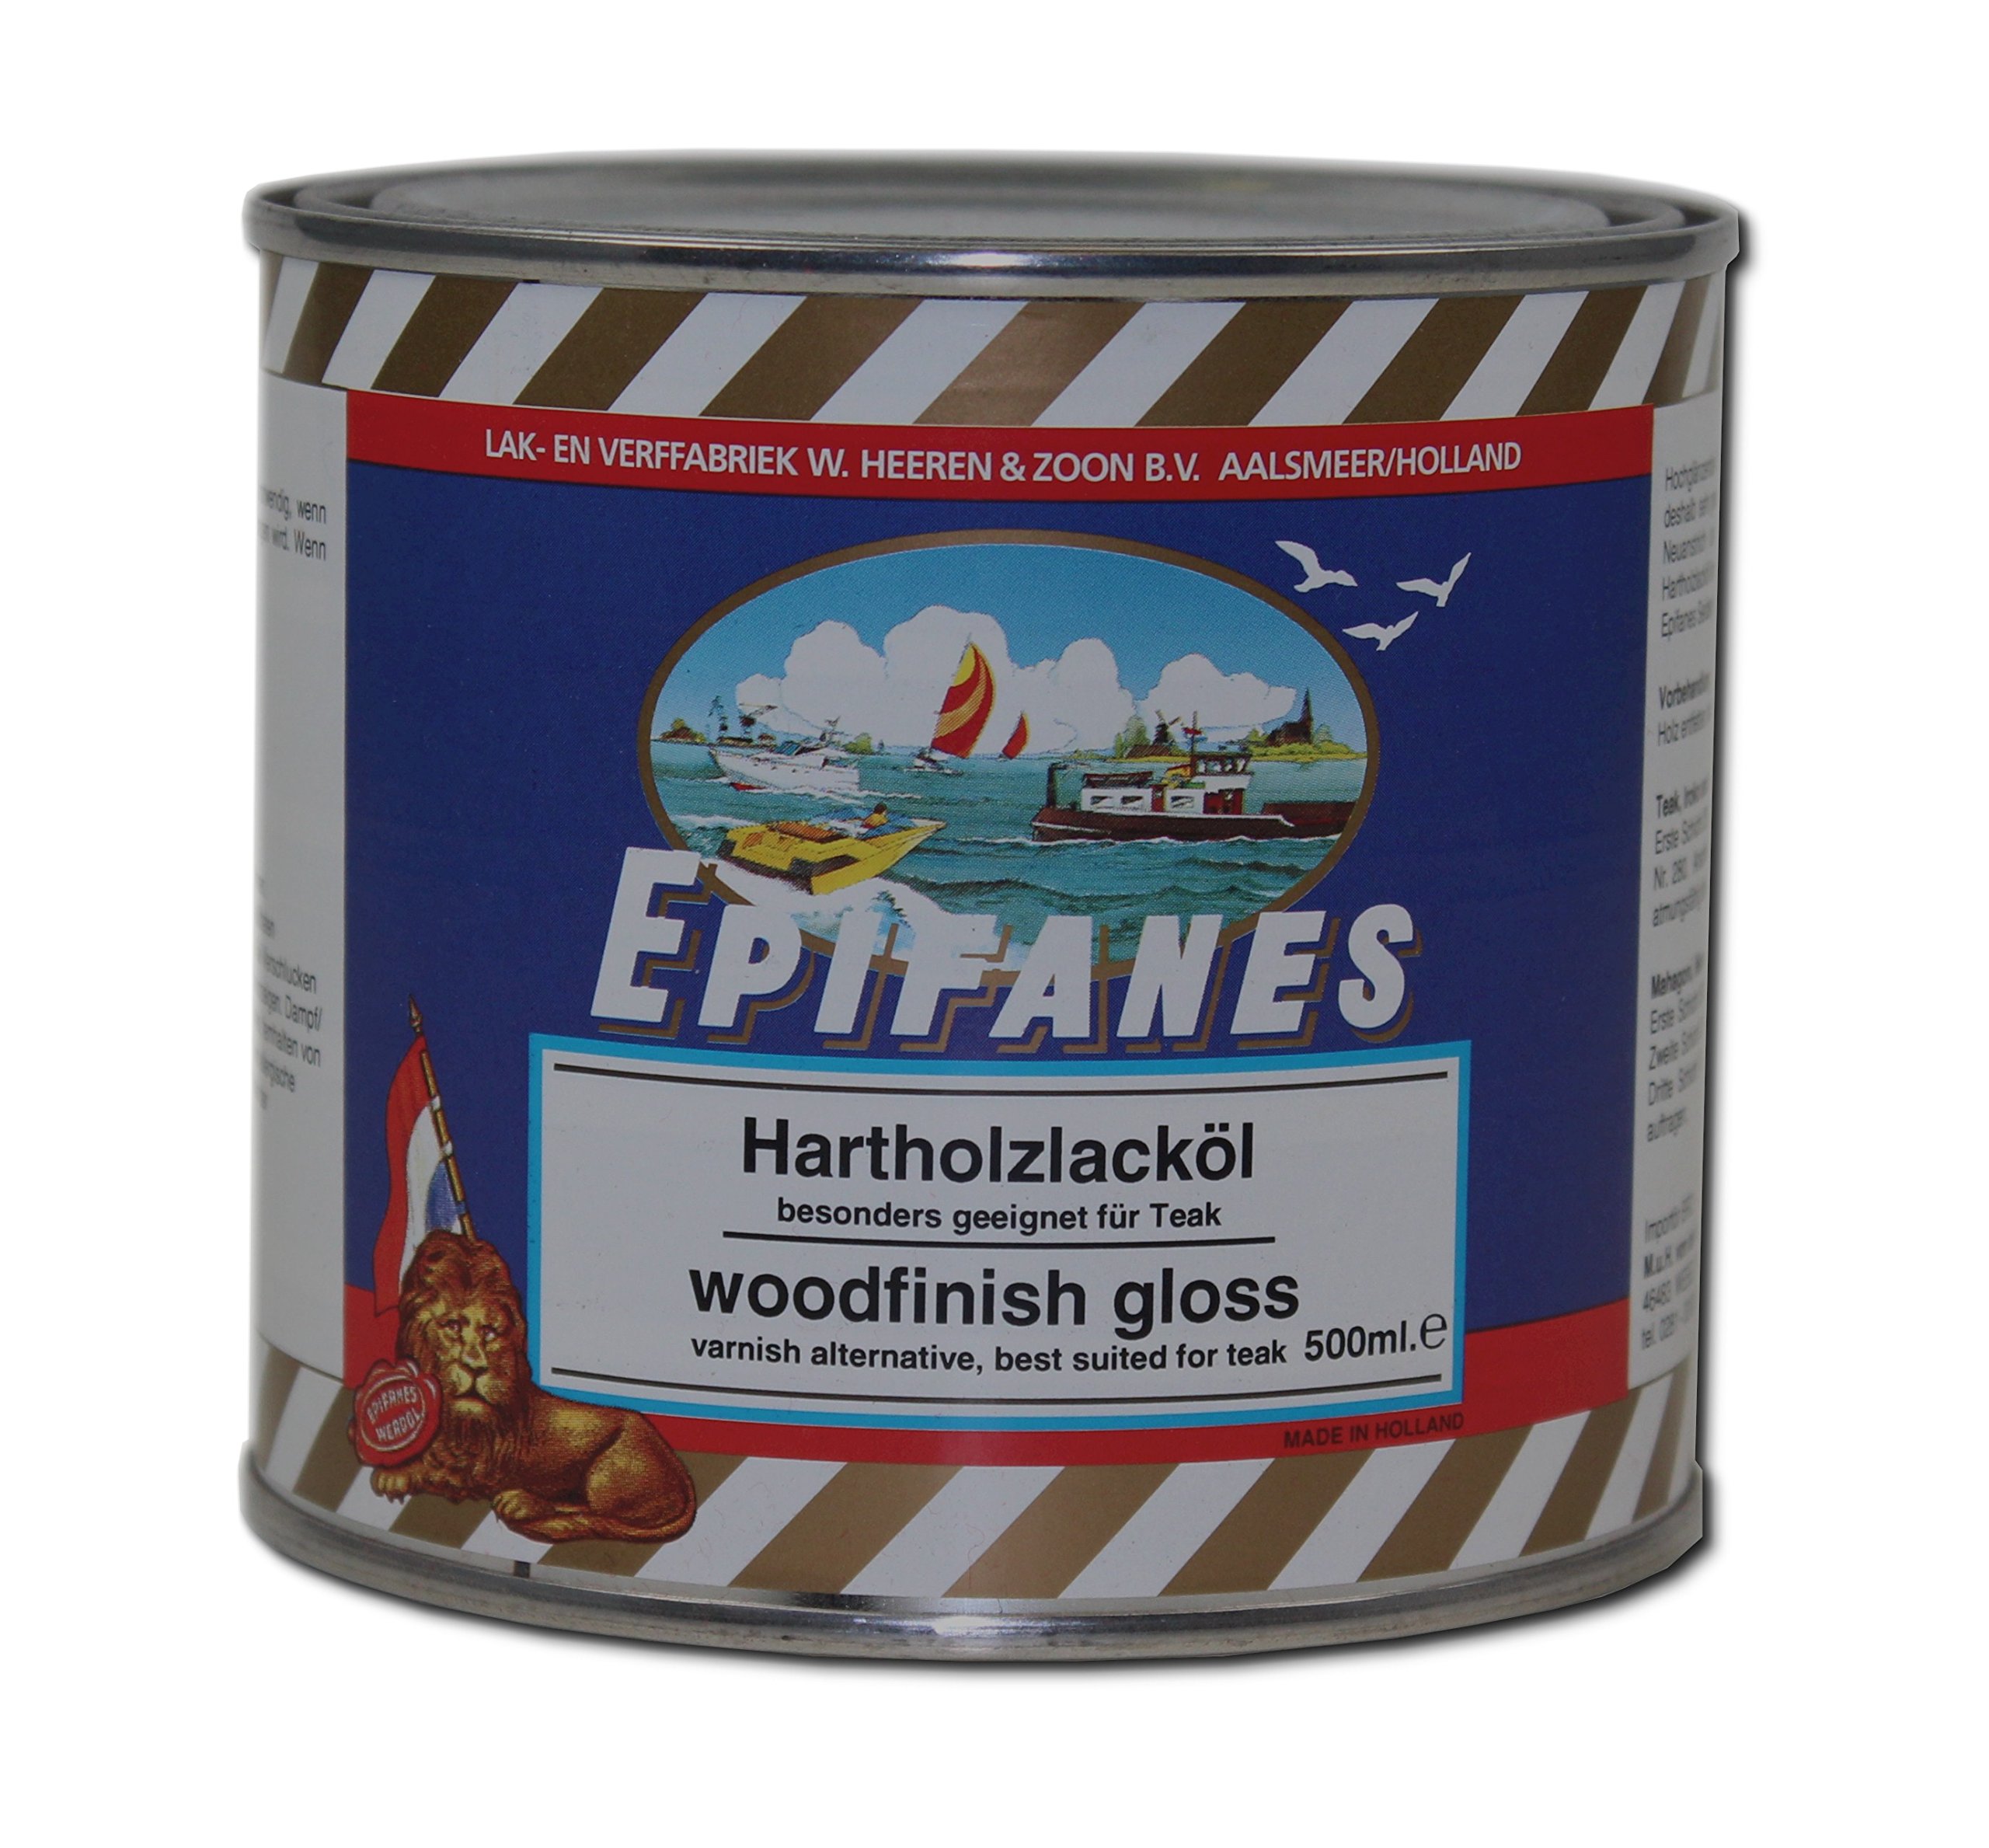 EPIFANES Hartholzlacköl 500ml E1-5